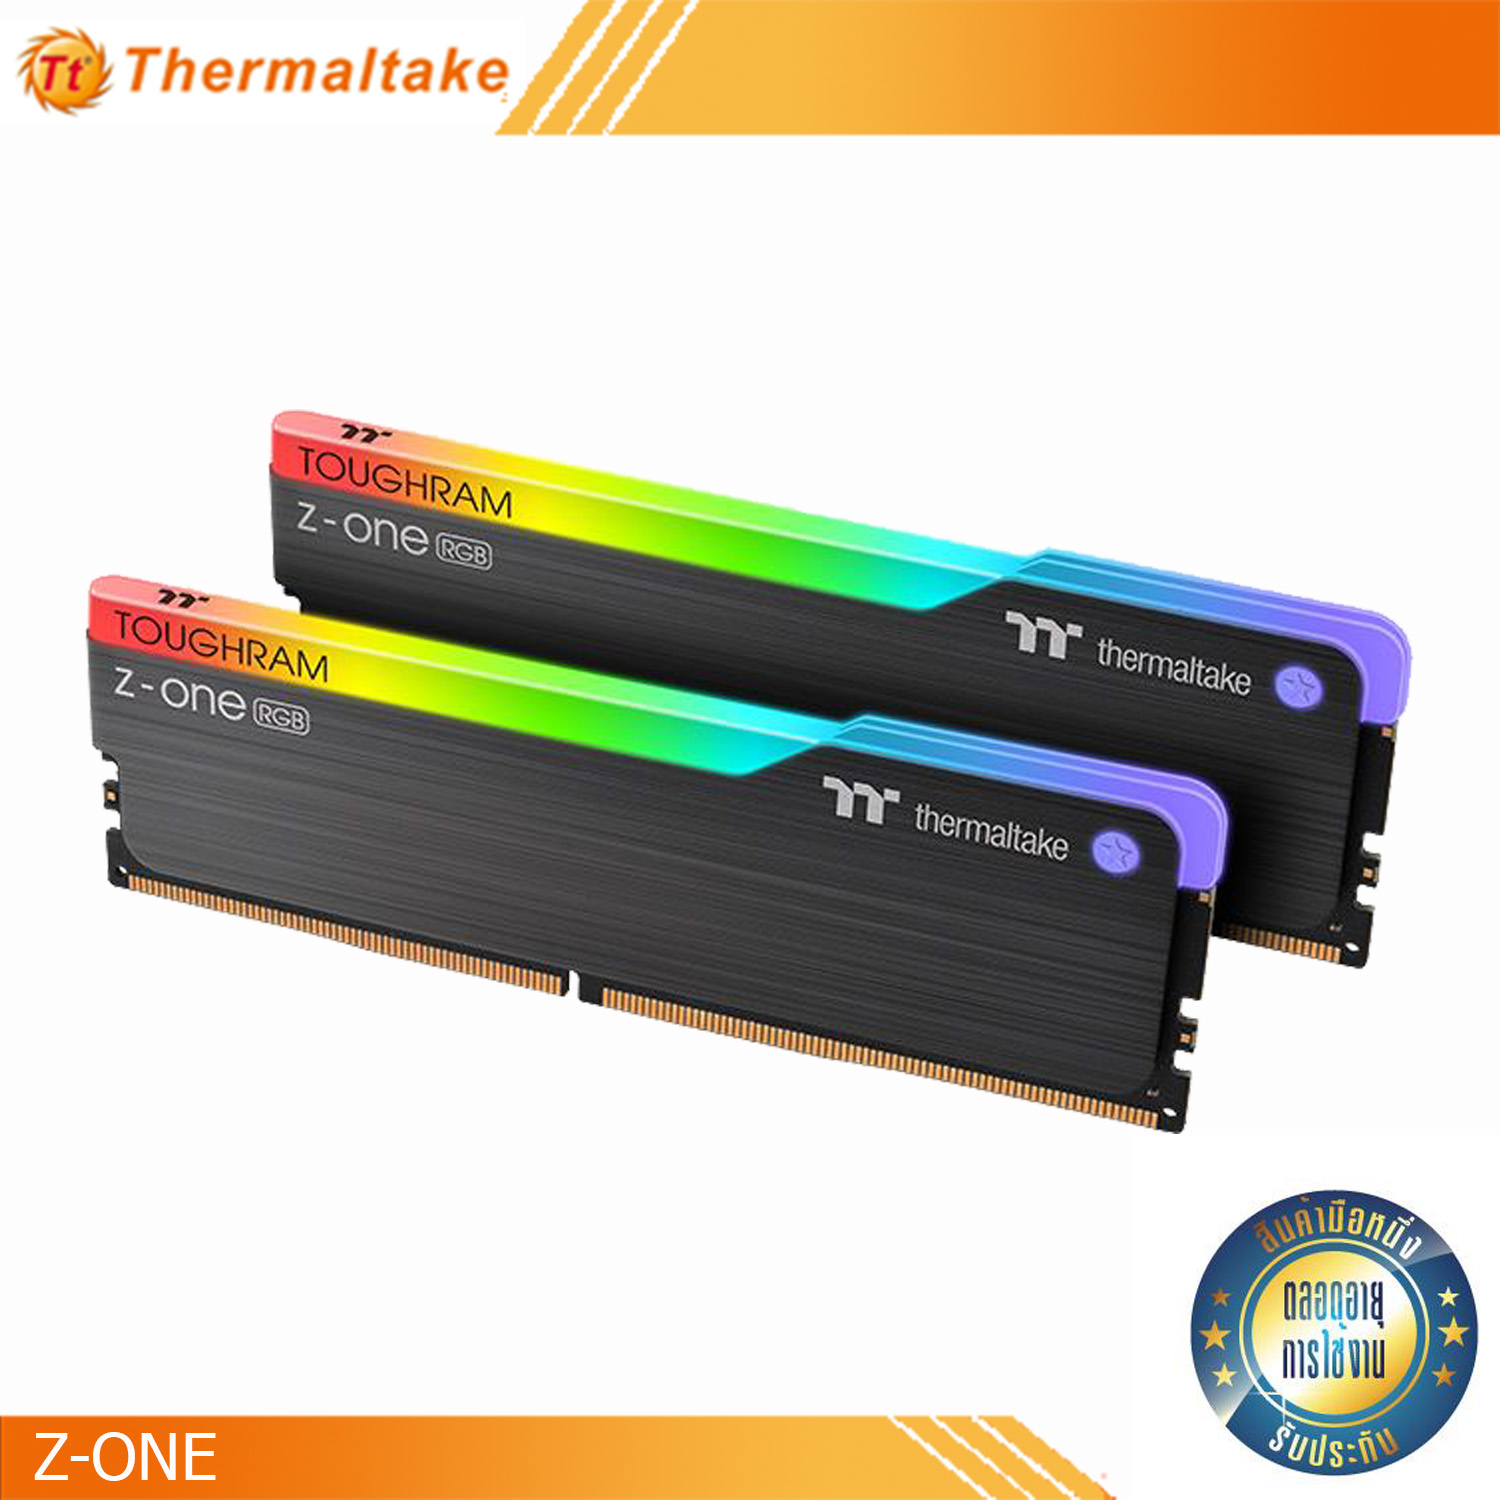 RAM THERMALTAKE TOUGHRAM Z-ONE RGB Memory DDR4 3200MHz 16GB (8GB x 2)